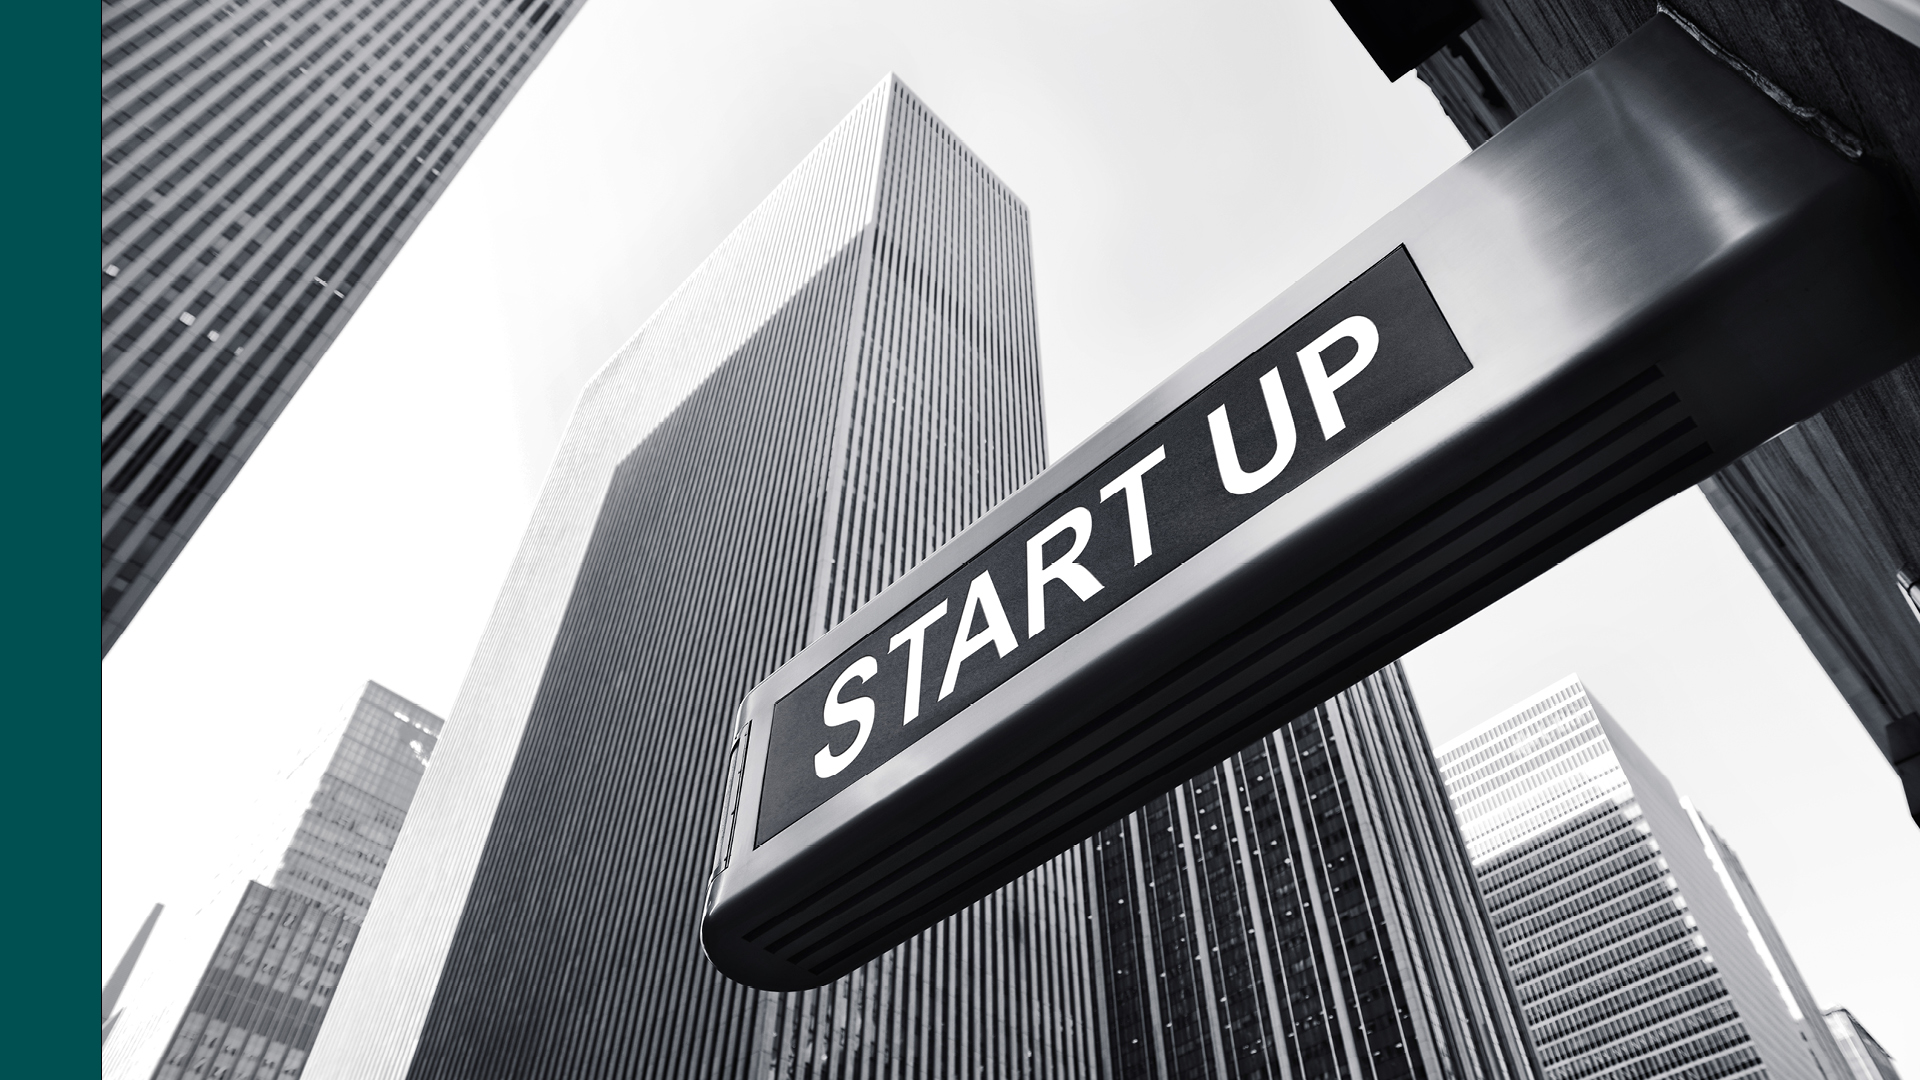 Svartvit foto av skyskrapor med orden "Start up"